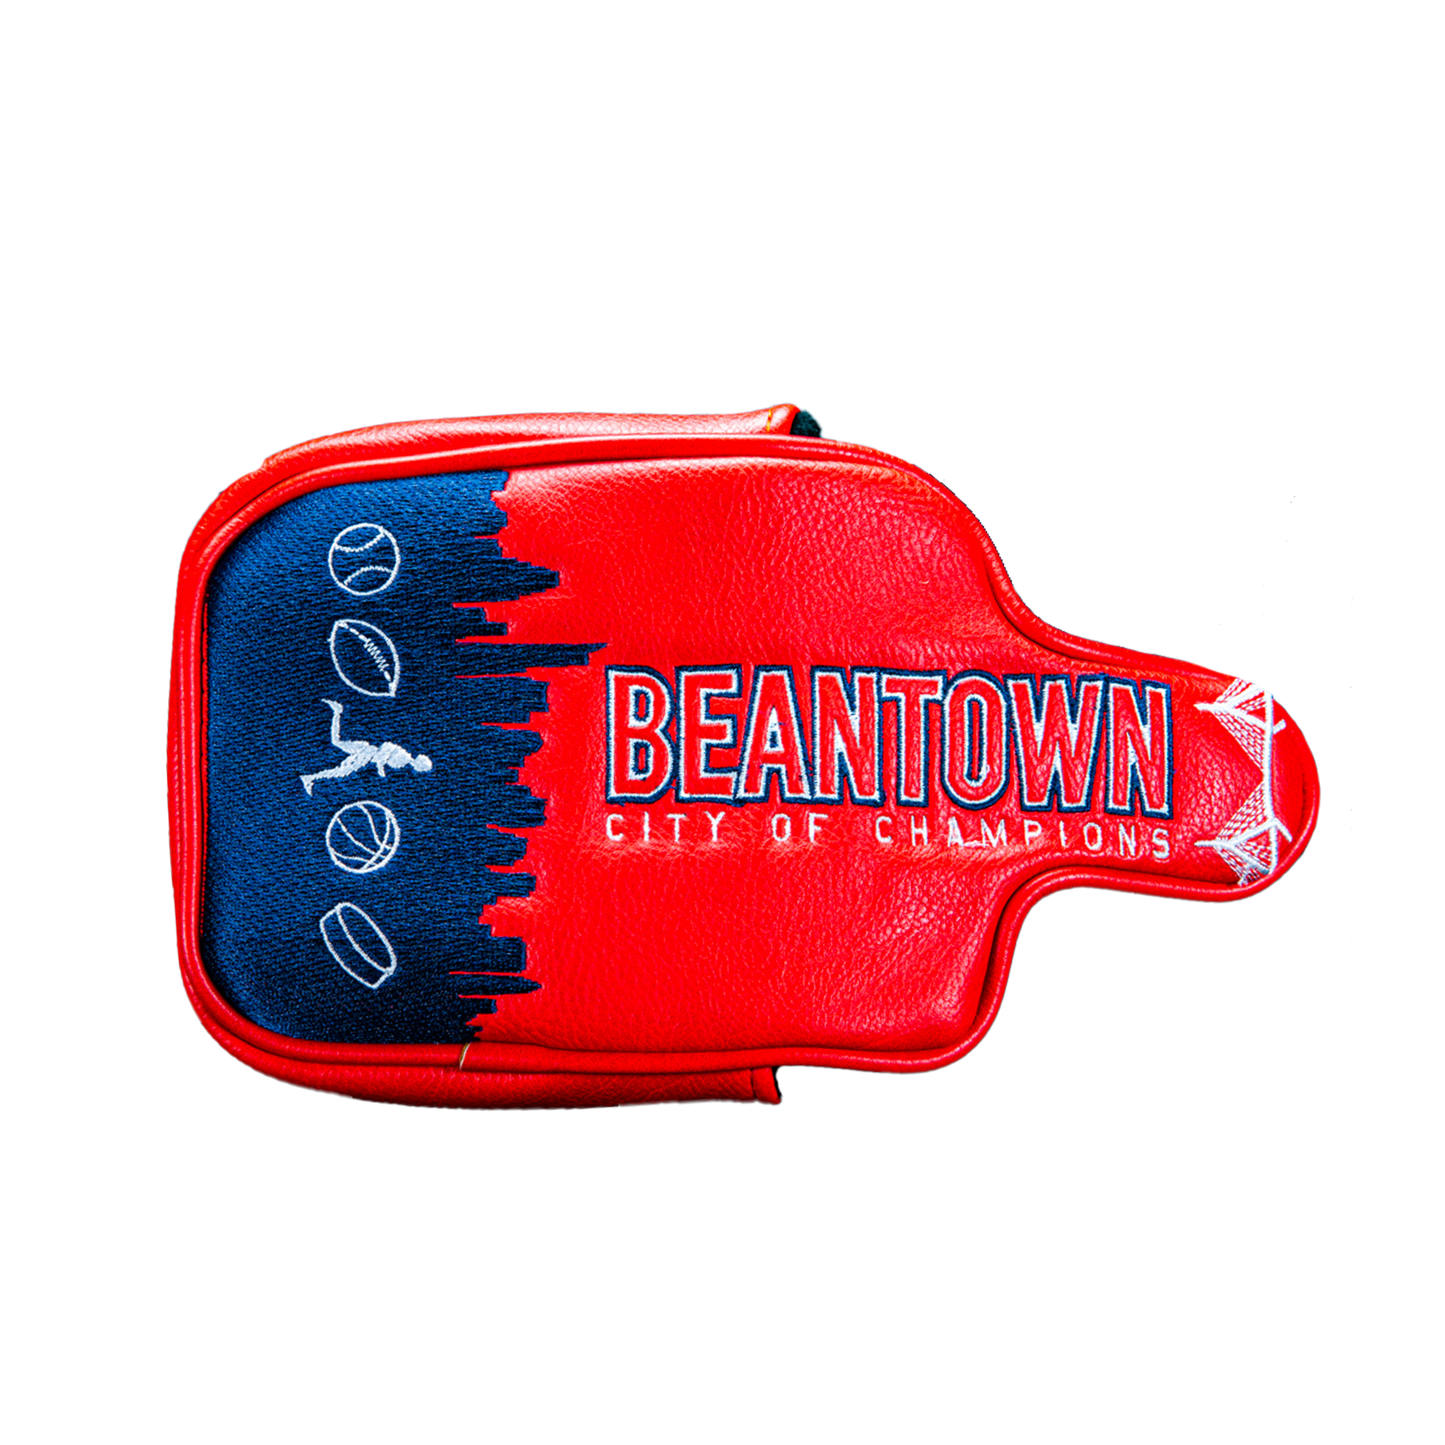 Boston "Beantown" Mallet Putter Cover